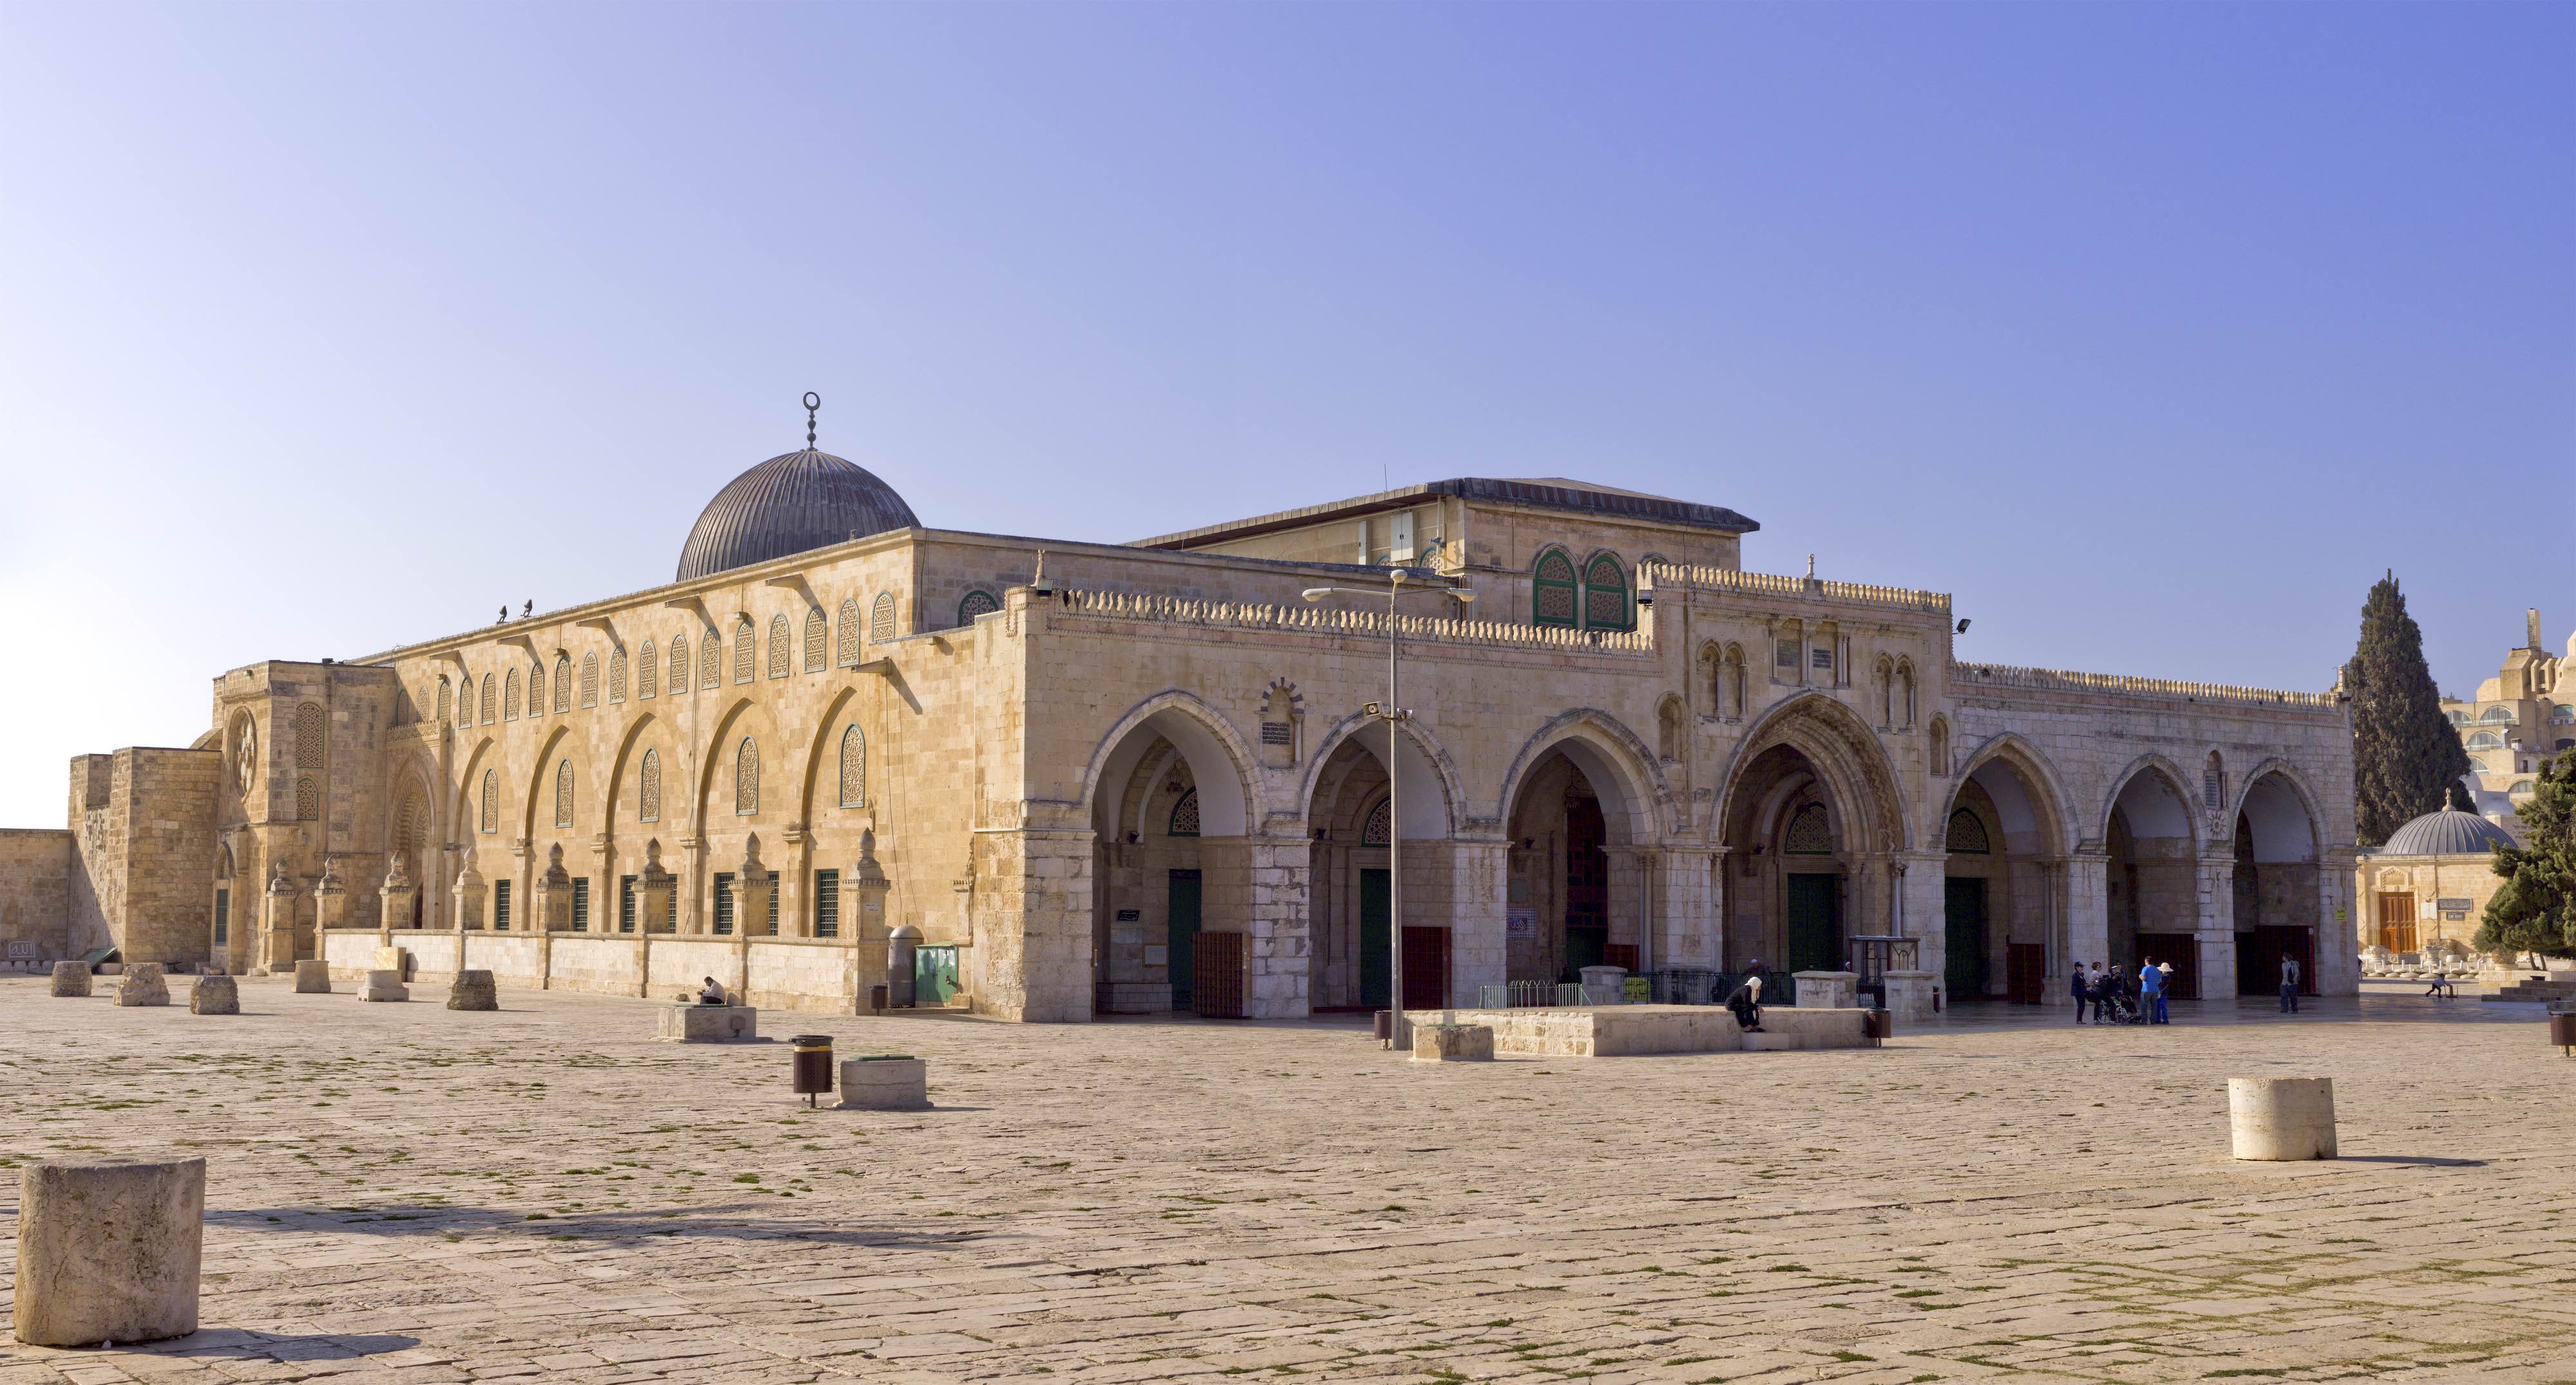 Al-Aqsa Mosque, Temple Mount, Jerusalem (photo: Andrew. Shiva, CC BY-SA 4.0)